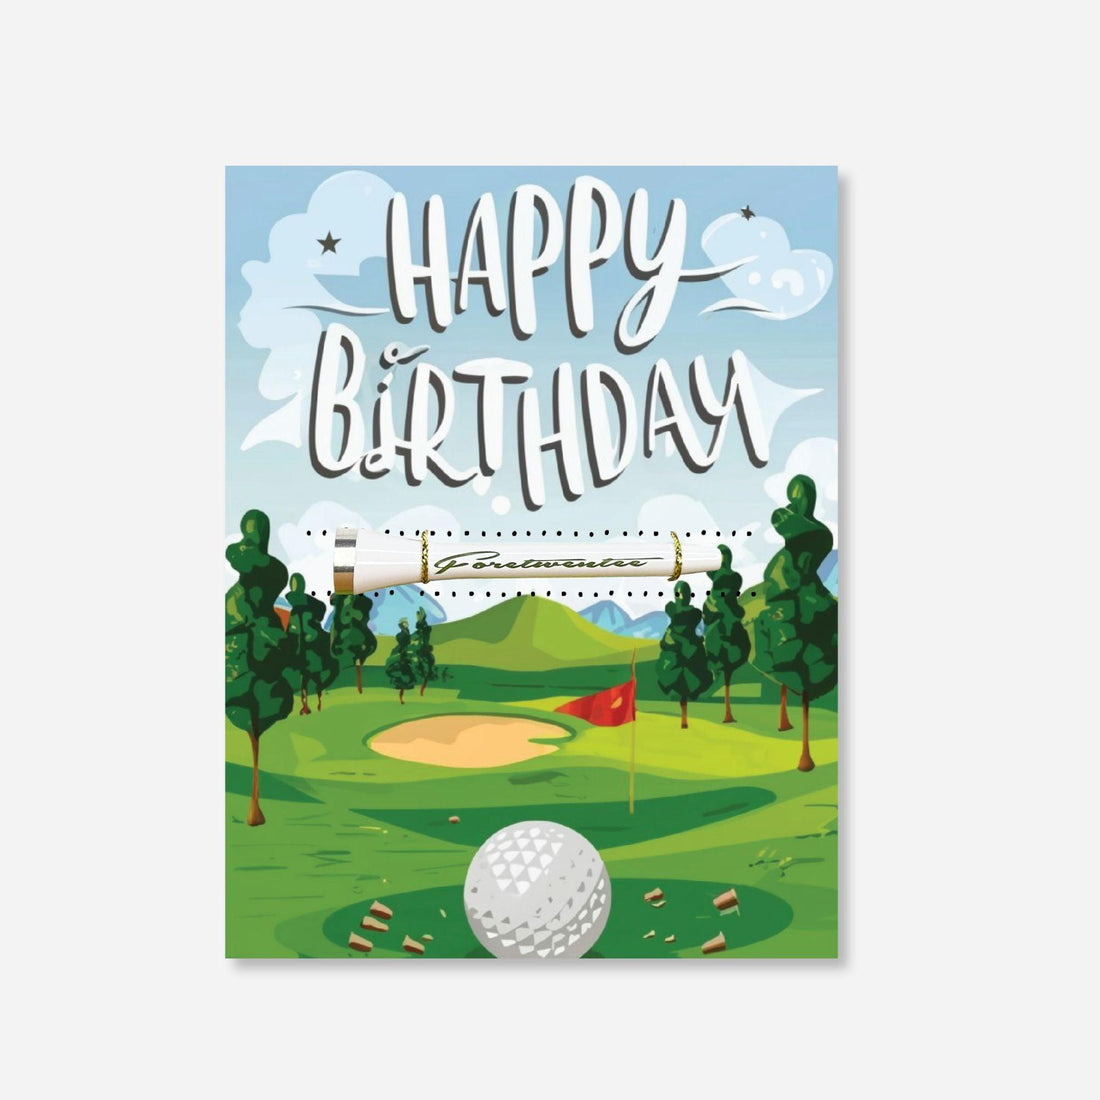 Golf-themed birthday card with &